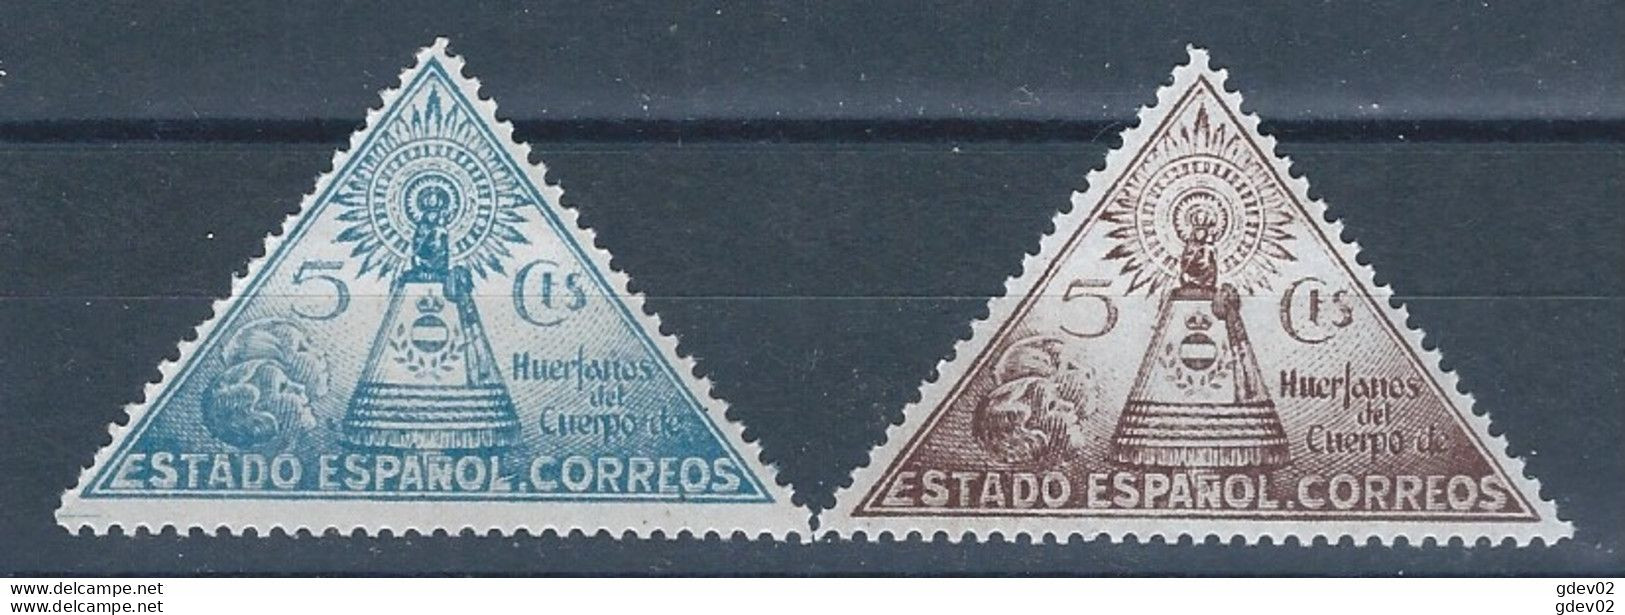 ESBE19SCCF-L4249-TESPCURIOSID.Spain.Espagne   BENEFICENCIA.VIRGEN DE EL PILAR. 1938  ( 19/0* )C/ Charnela .MAGNIFICO - Errors & Oddities